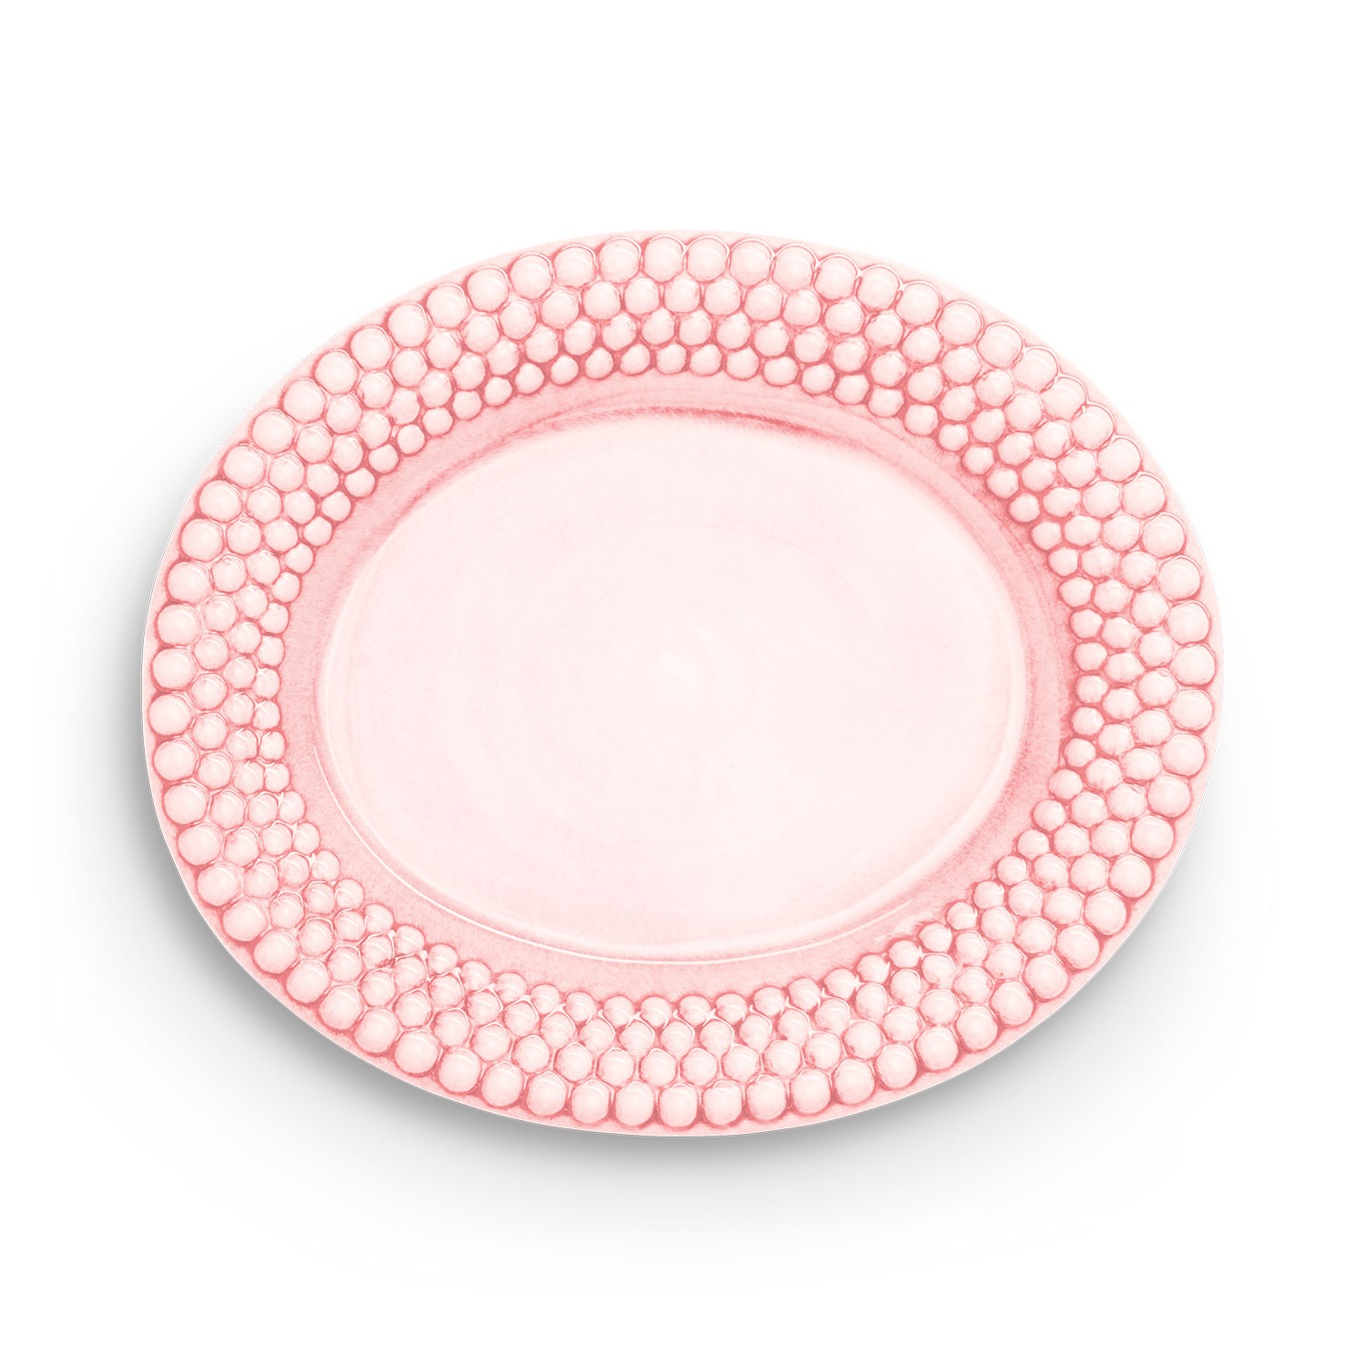 Bubbles Platter Oval 35 cm, Light Pink